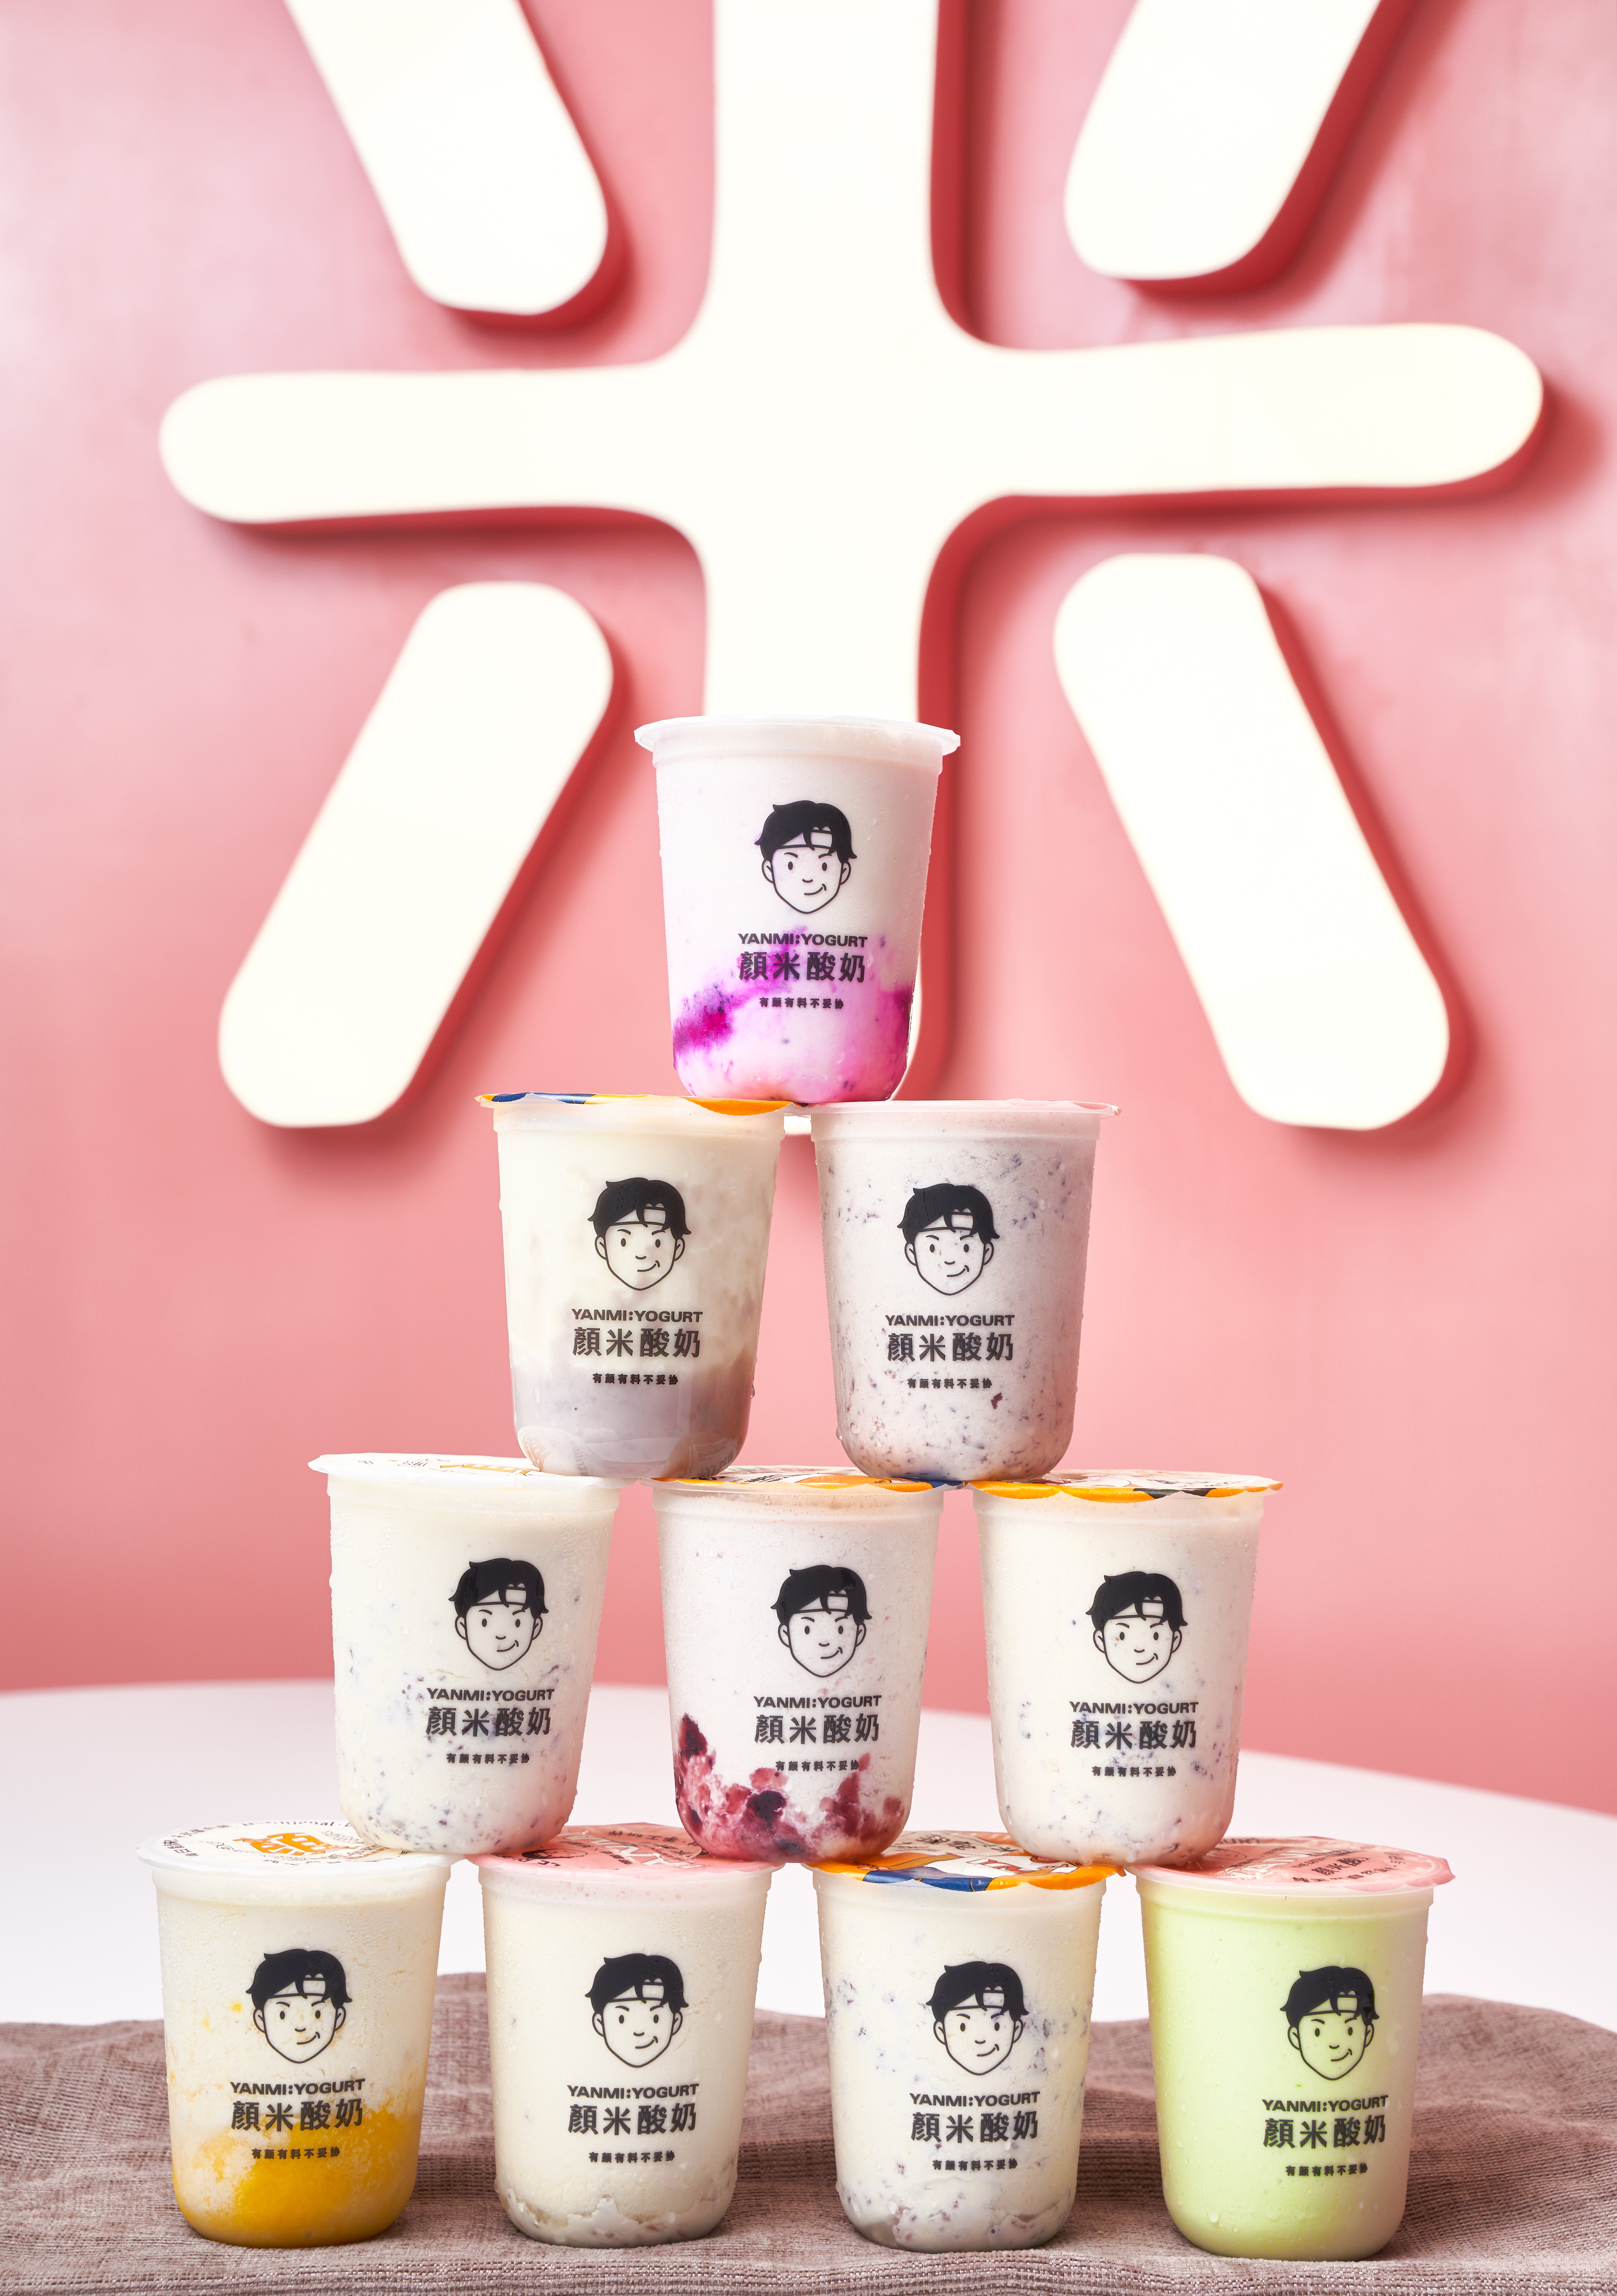 Popular yogurt drink store, Yanmi Yogurt (颜米酸奶), to offer 1-for-1 yogurt drinks from 26 to 28 Oct 19 - 4